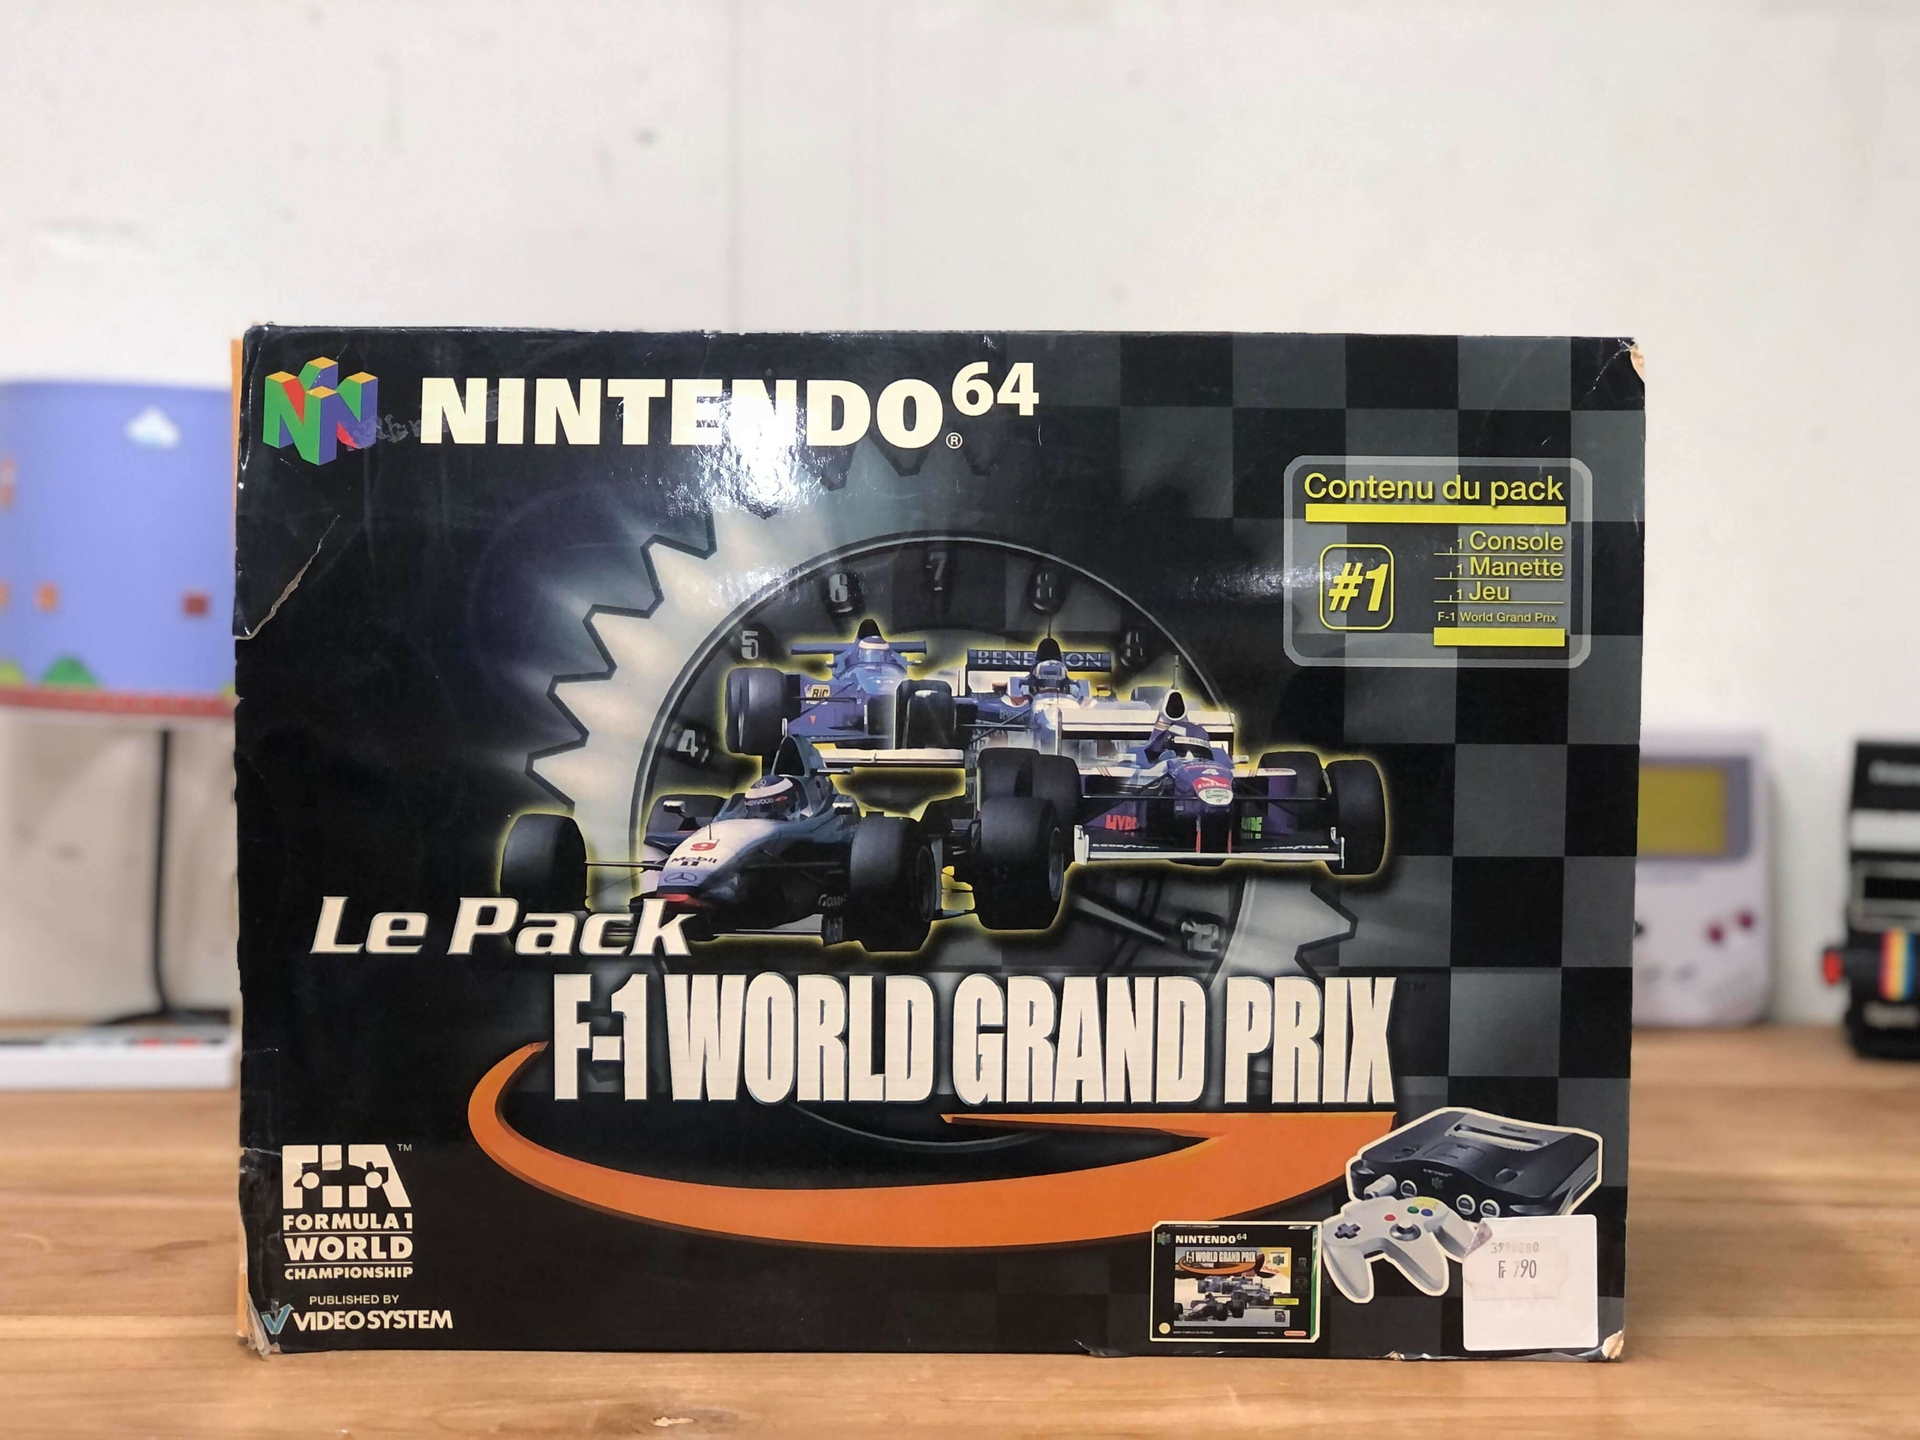 Nintendo 64 Starter Pack - F1 World Grand Prix Edition [Complete] - Nintendo 64 Hardware